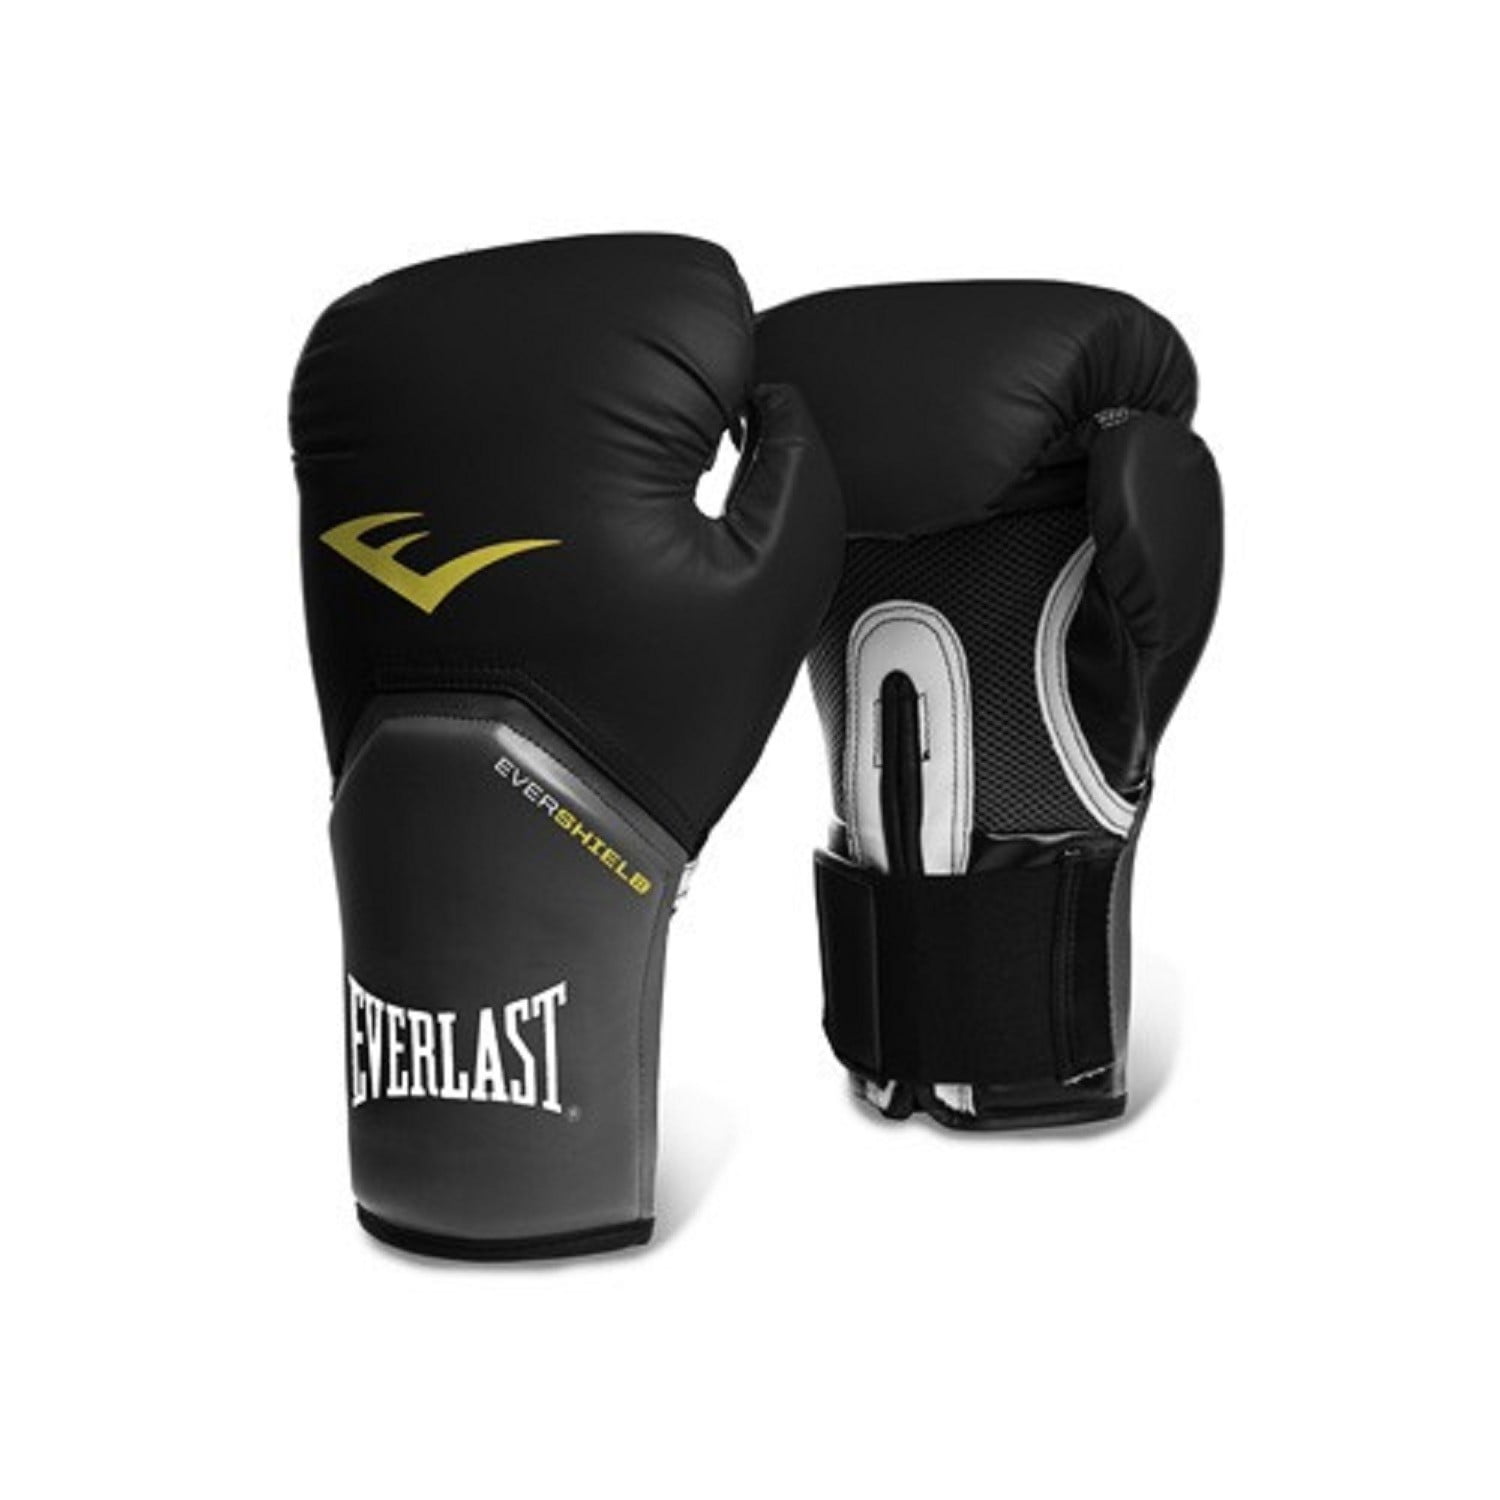 Everlast 9-ounce Pro Style Boxing Gloves - Walmart.com - Walmart.com